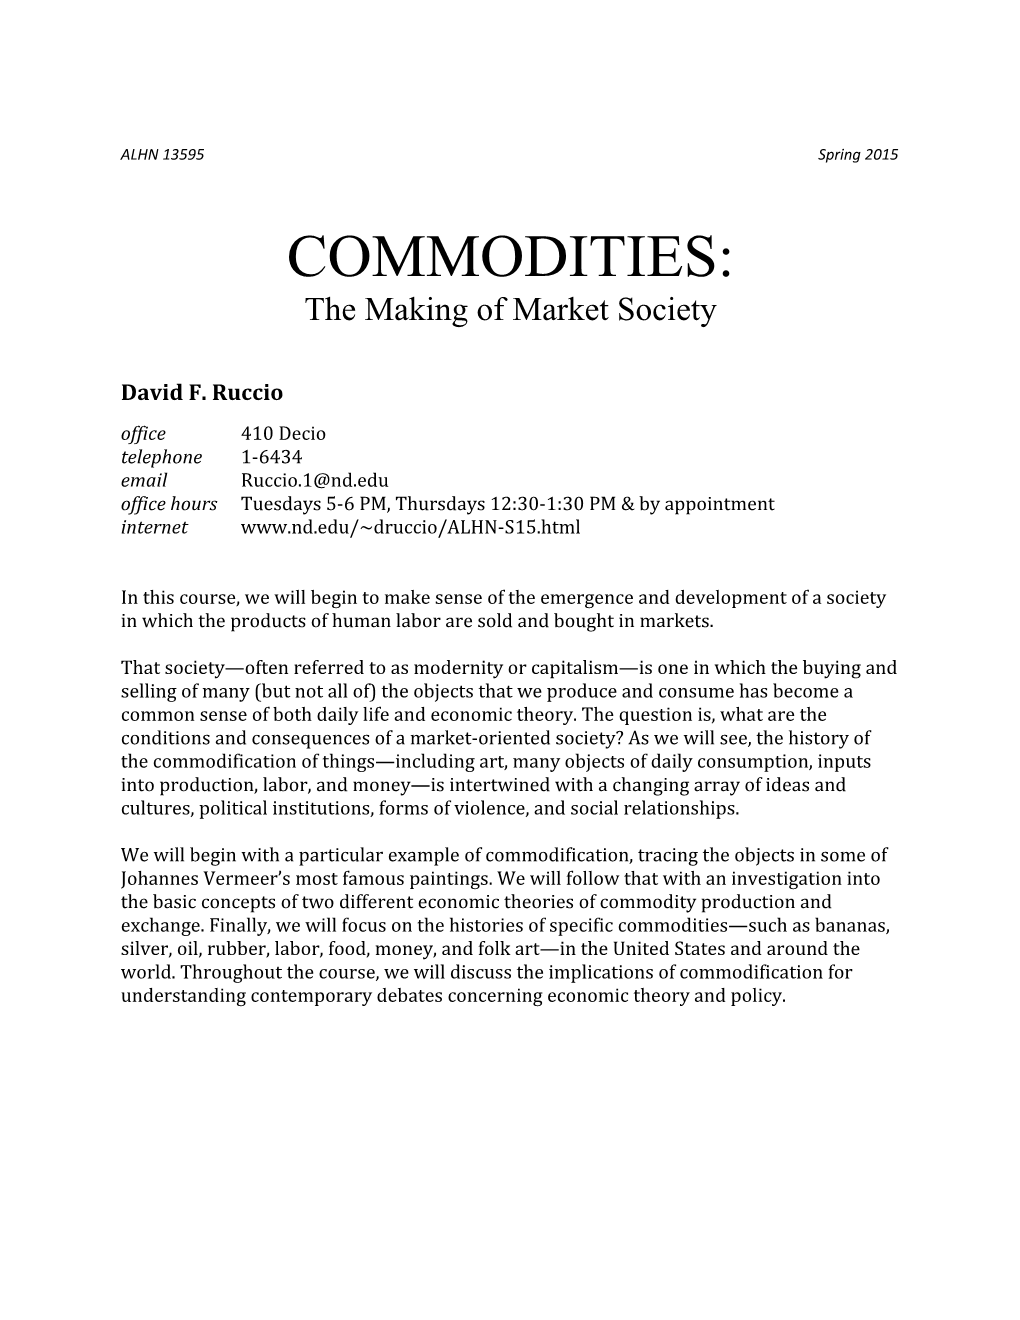 The Making of Market Society